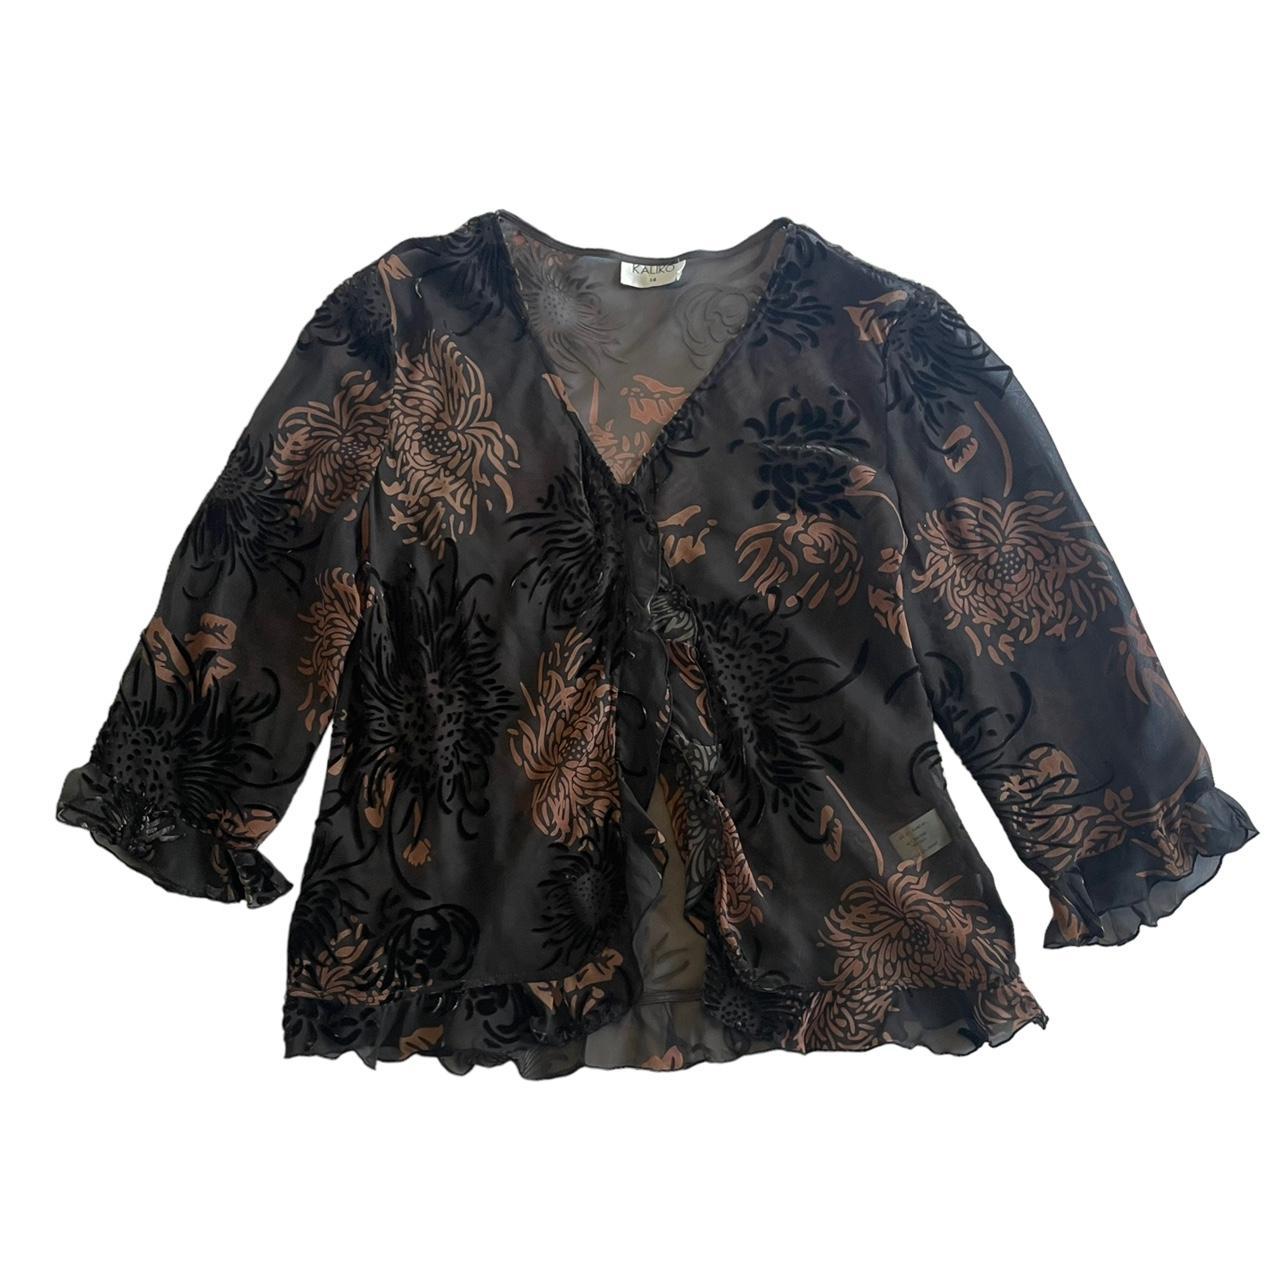 Silk and velvet floral blouse 90s/00s 100% silk... - Depop